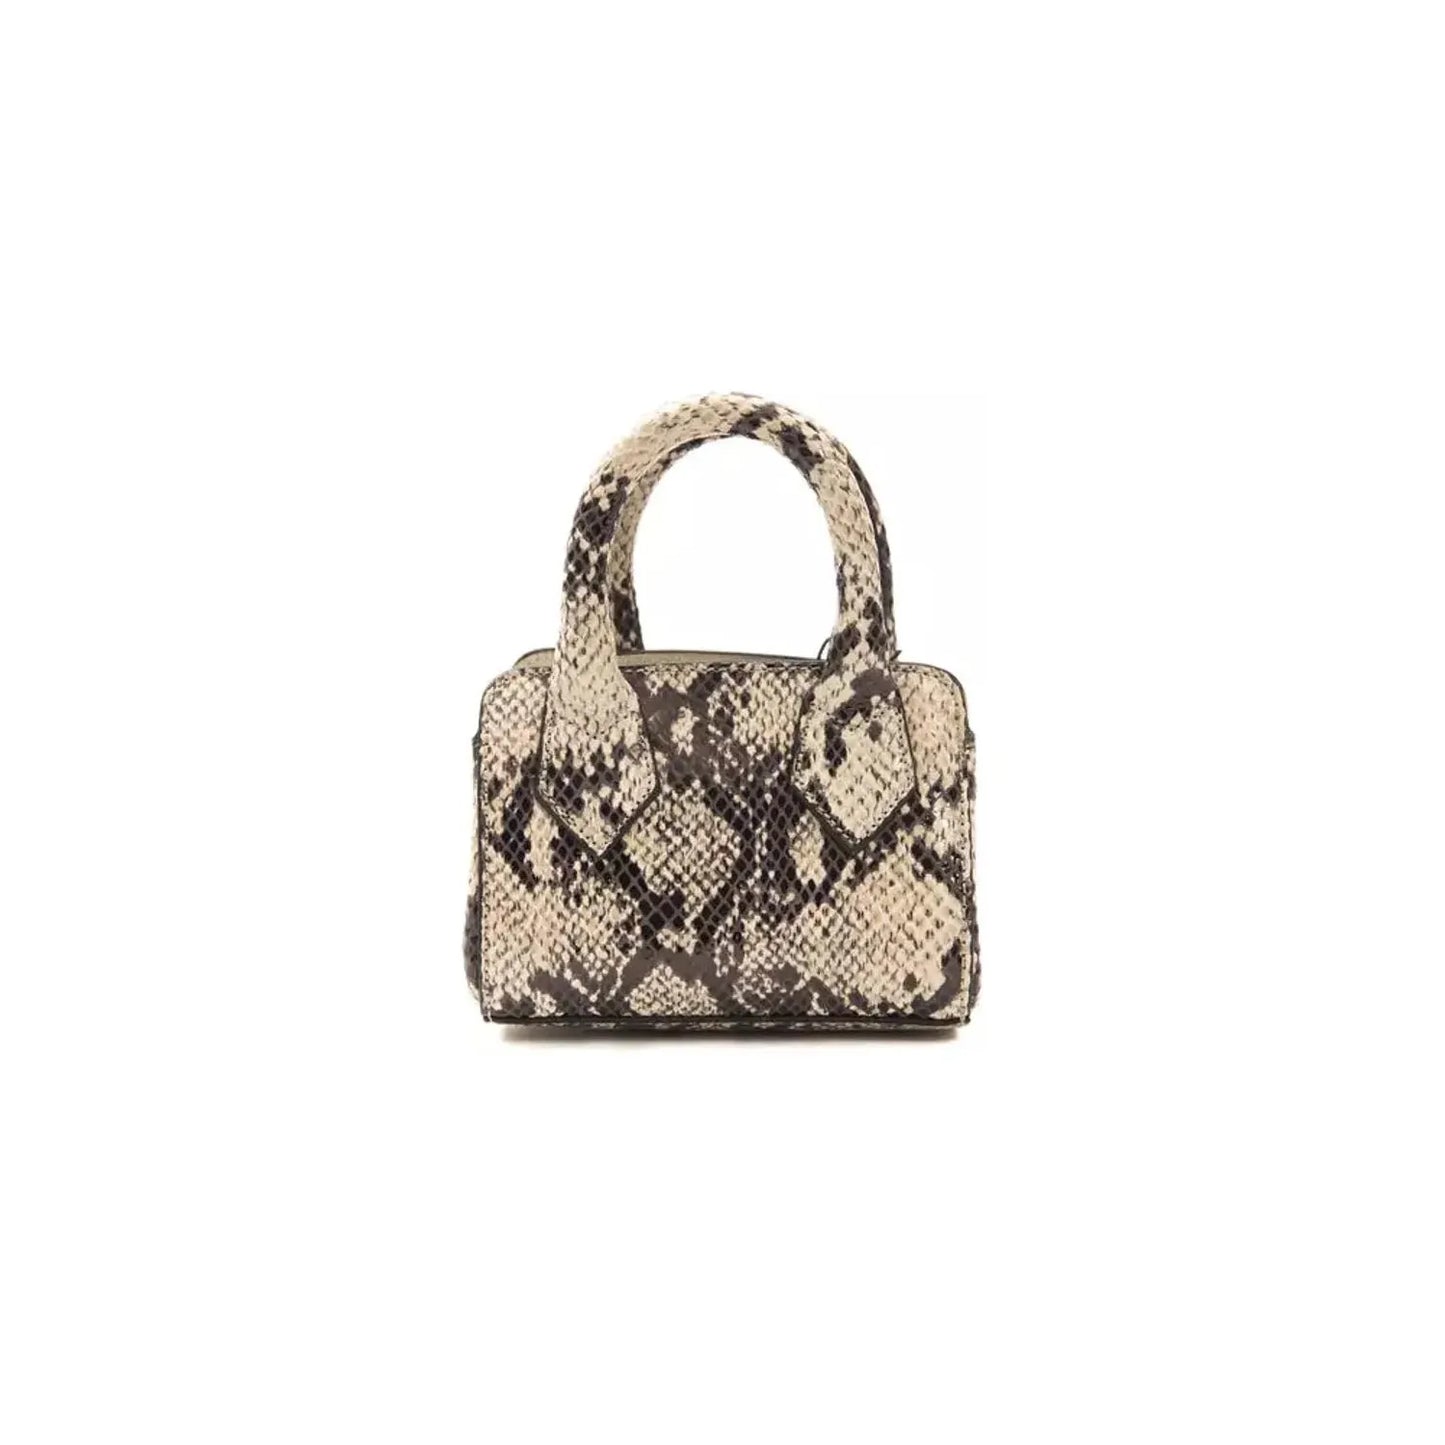 Pompei Donatella Chic Gray Python Mini Tote With Adjustable Straps roccia-stone-handbag stock_product_image_5781_1530613503-28-0c19aeff-f24.webp